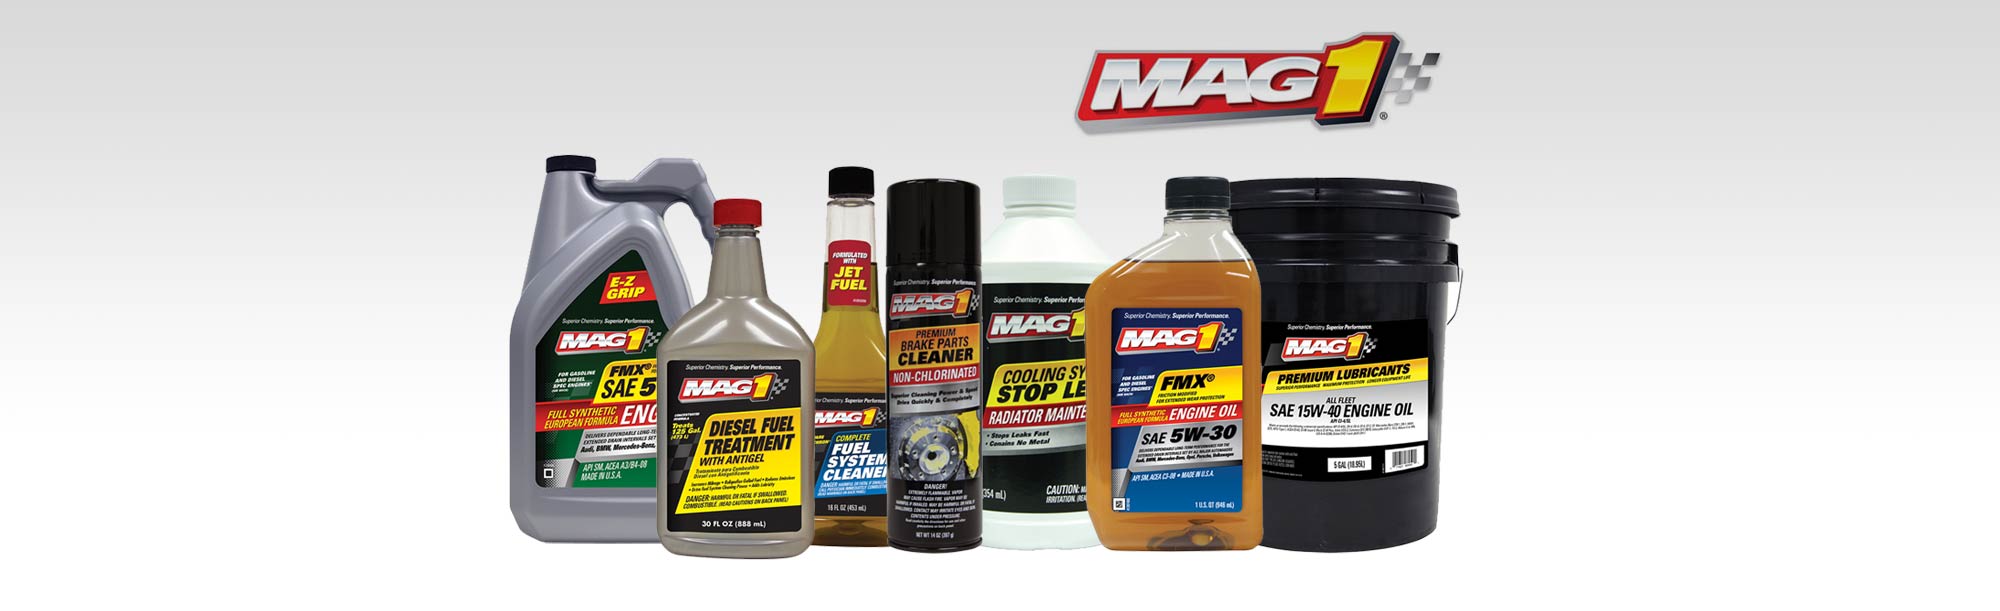 MAG 1® Engine Degreaser - Mag 1